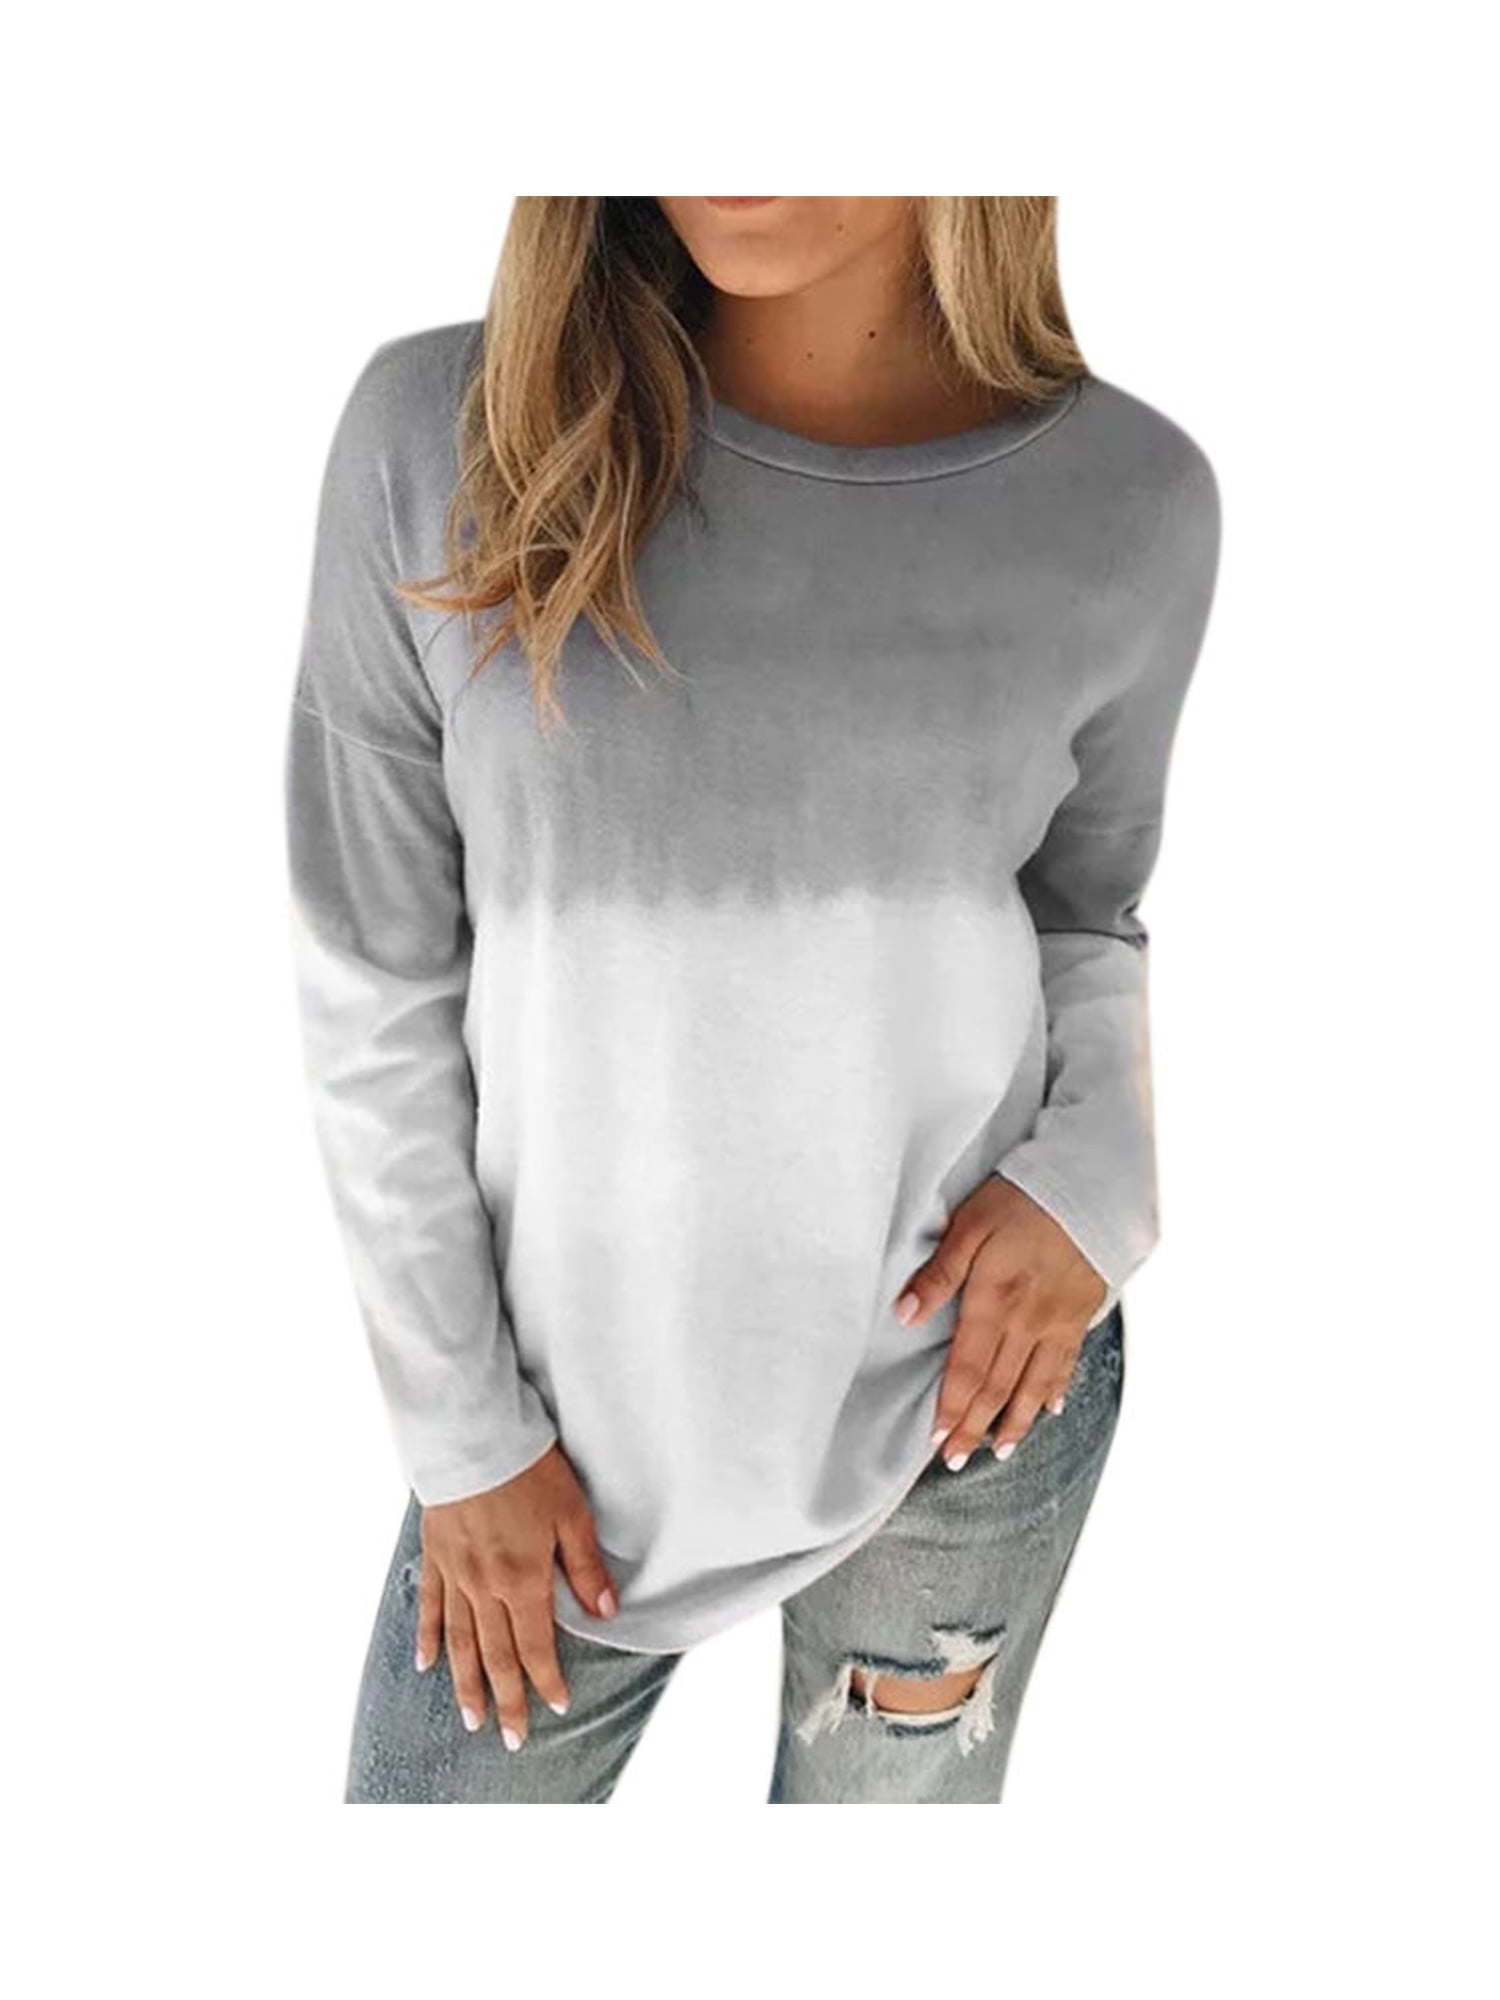 Women Pullover Long Sleeve Shirts Teen Girls Lace Pacthwork Sweatshirts Cross Tie Cute Sweater Blouse Tops Plus Size 